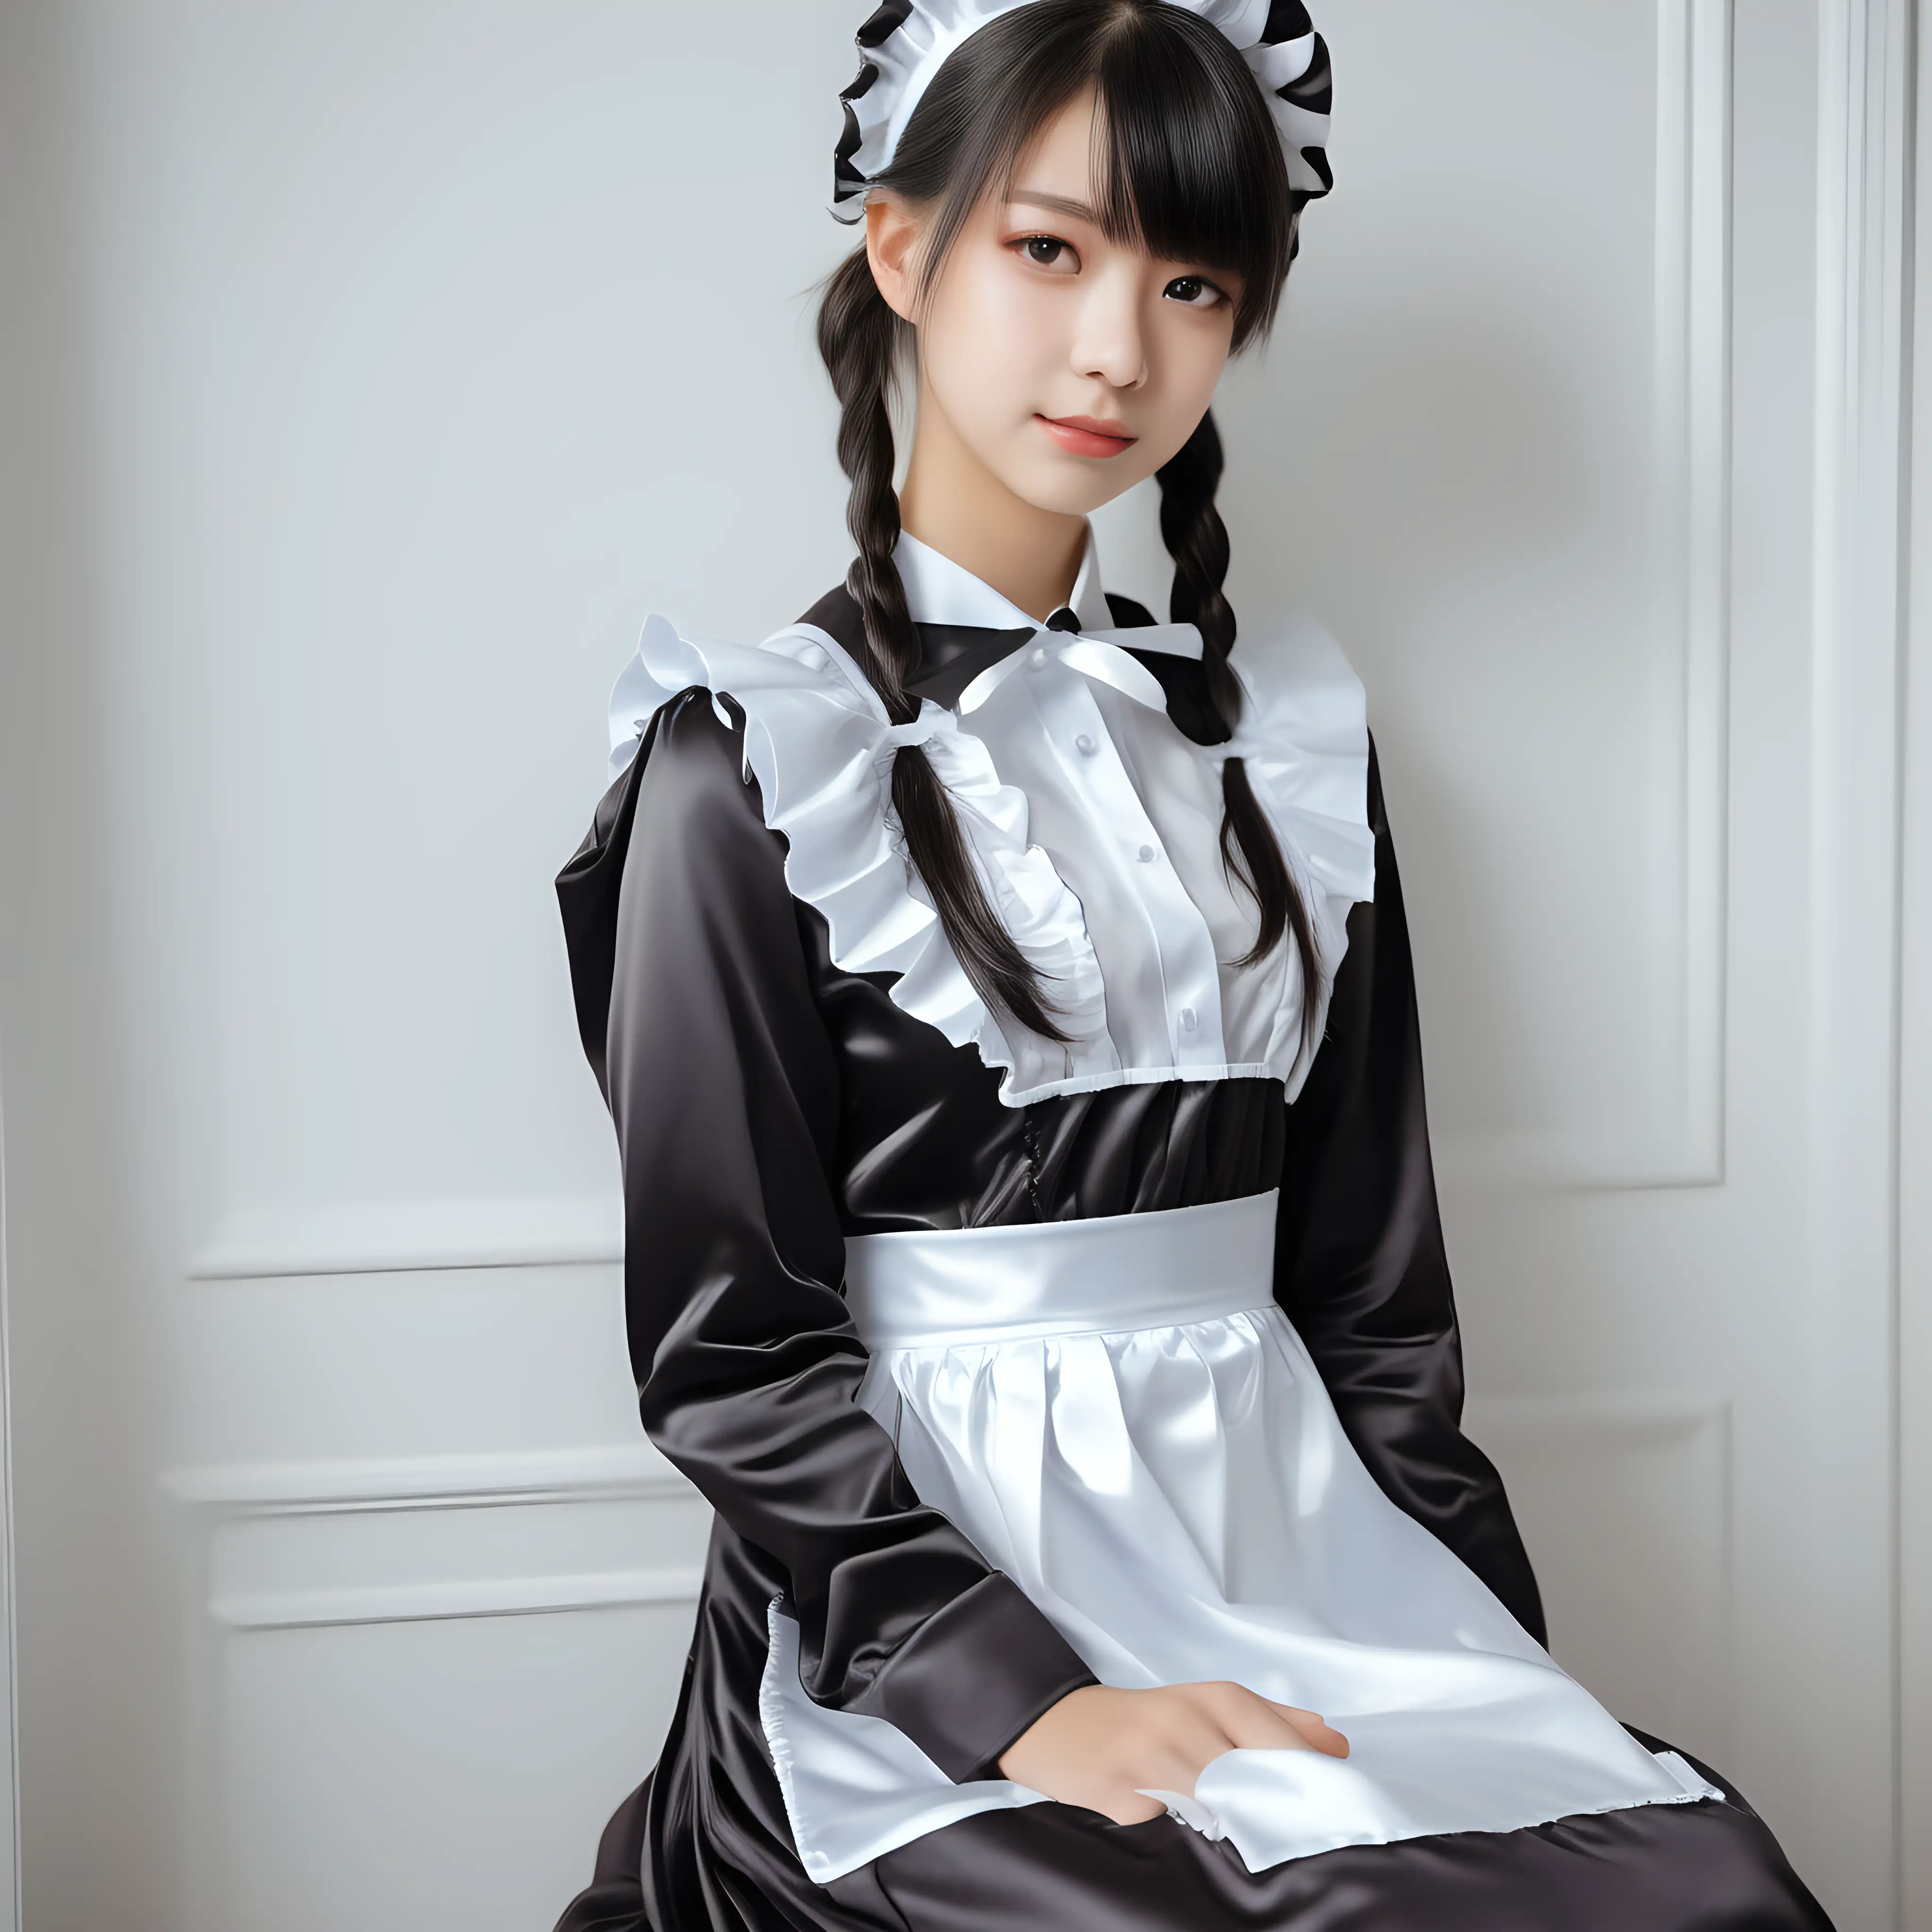 Elegant Girl in Satin Maid Uniform Graceful House Servant in Luxurious Attire